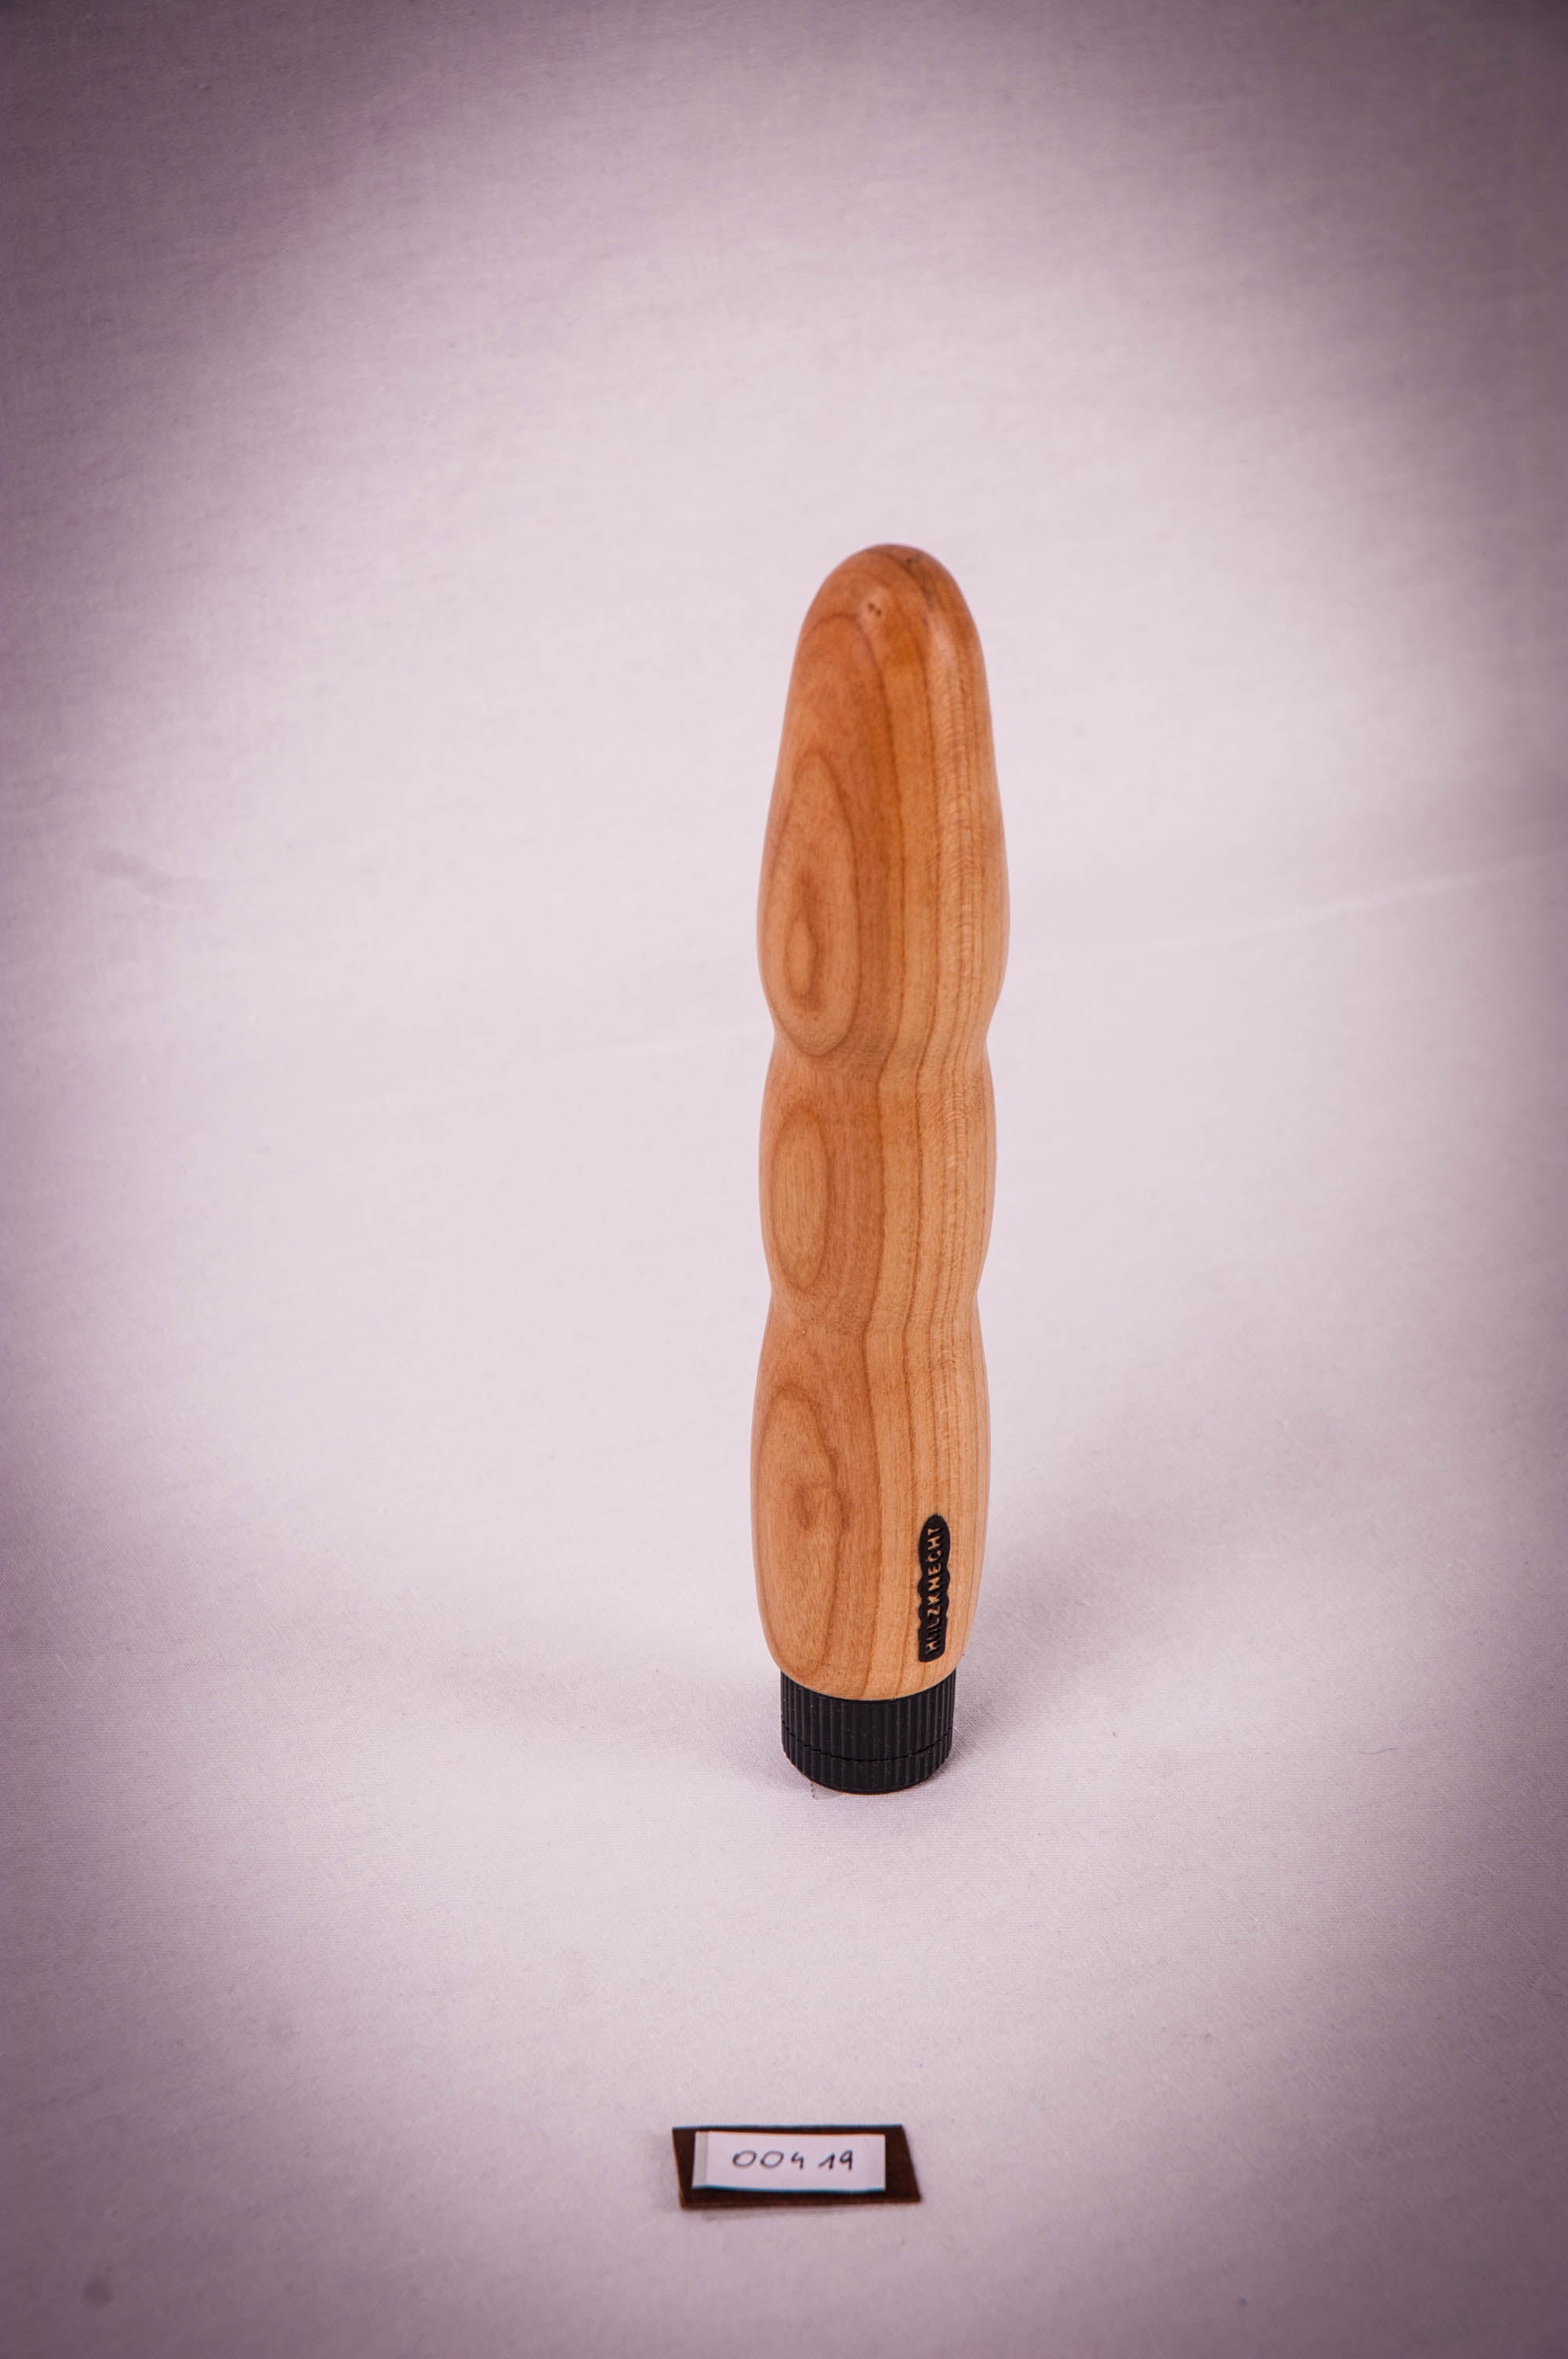 SUMMSI || Kirsche || Holzvibrator || Holzdildo || Sex Toy || Wood Vibrator || handmade by Holz-Knecht